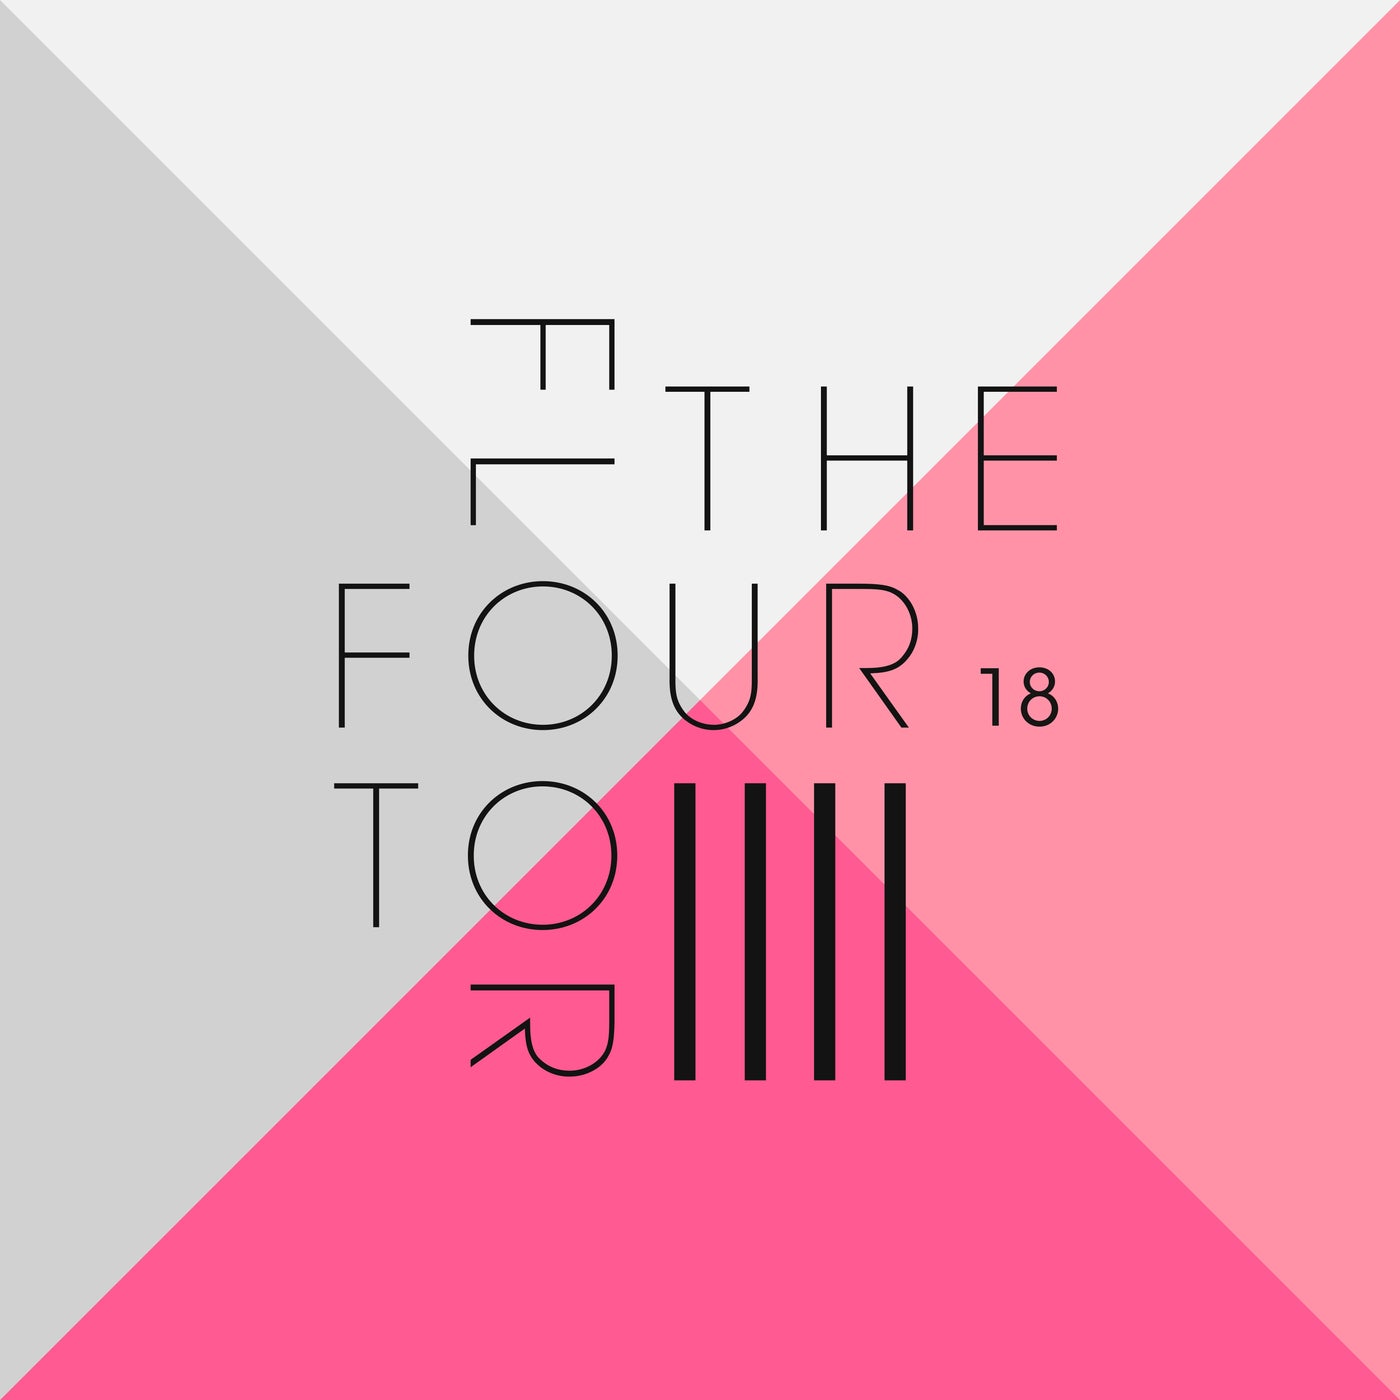 image cover: VA - Four To The Floor 18 / DIYFTTF18